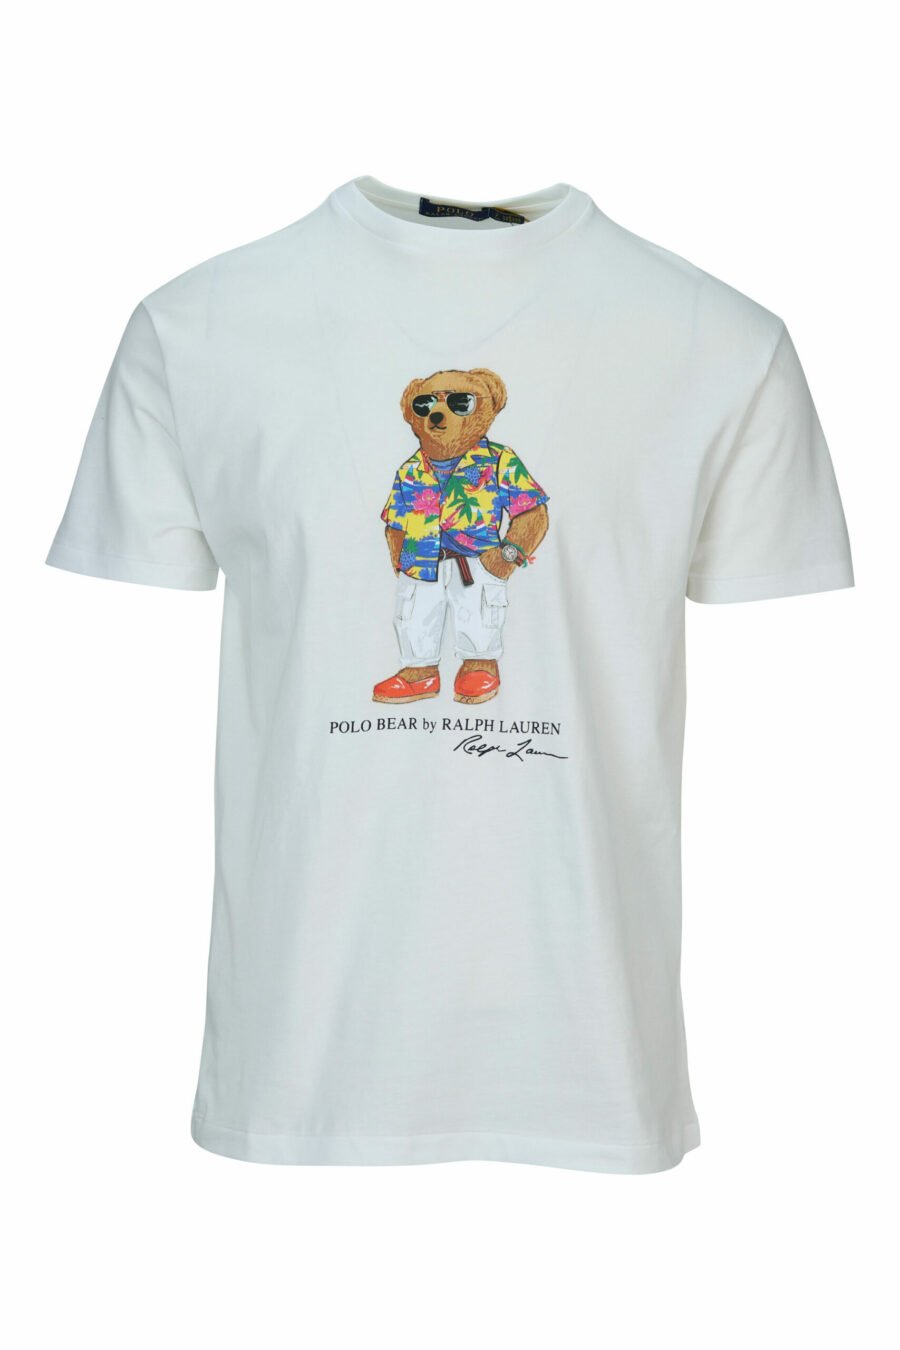 Weißes T-Shirt mit Maxilogo "Polobär" Strandbekleidung - 3616535843479 skaliert